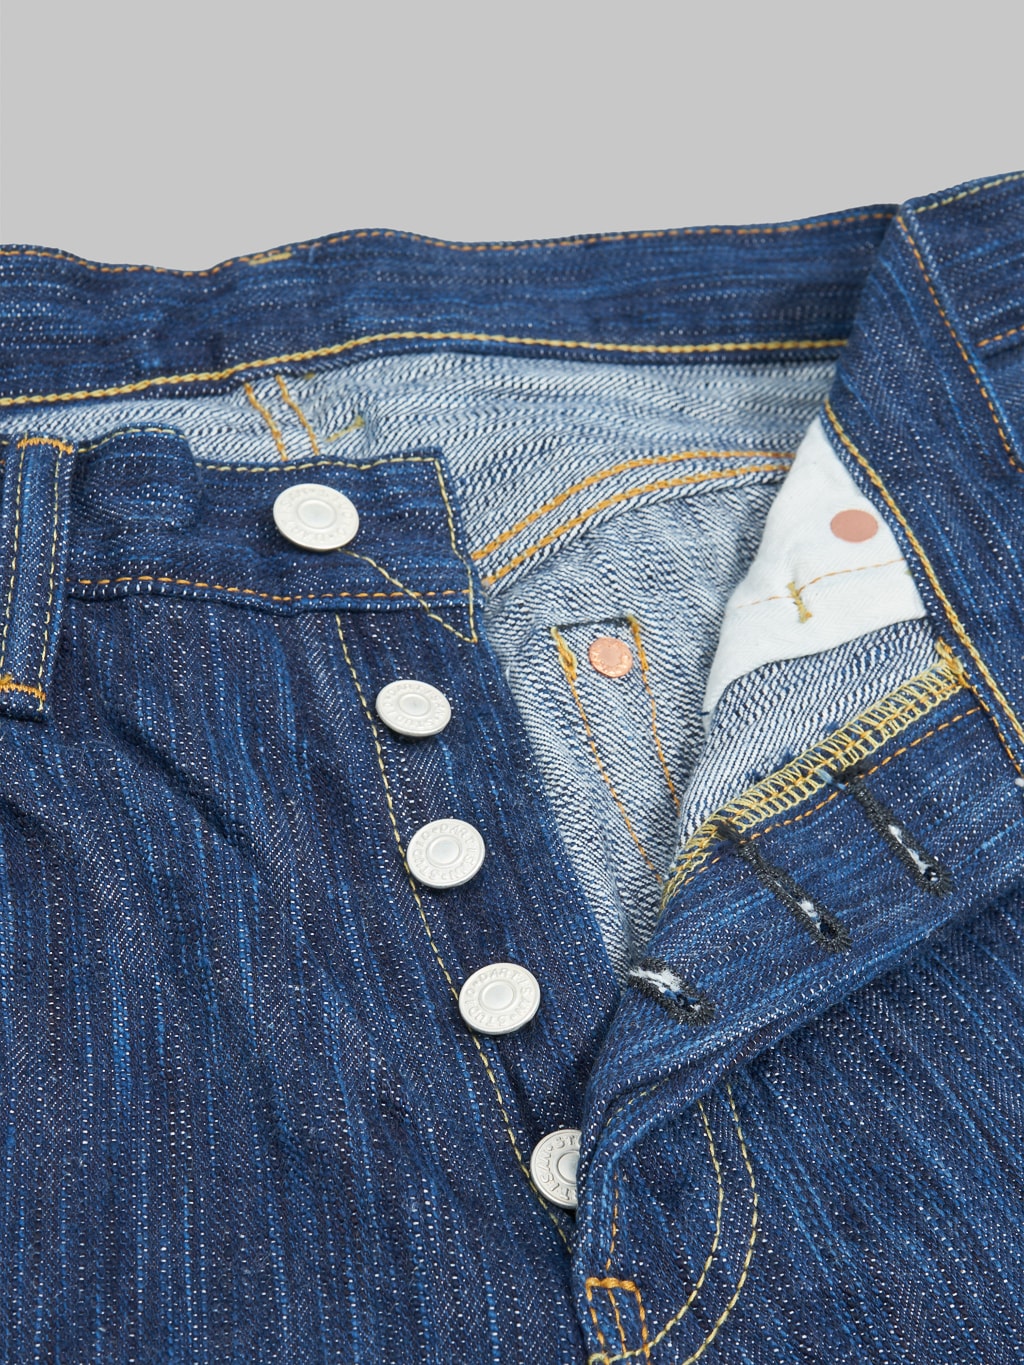 Studio dartisan tokushima awa shoai regular straight jeans buttons details